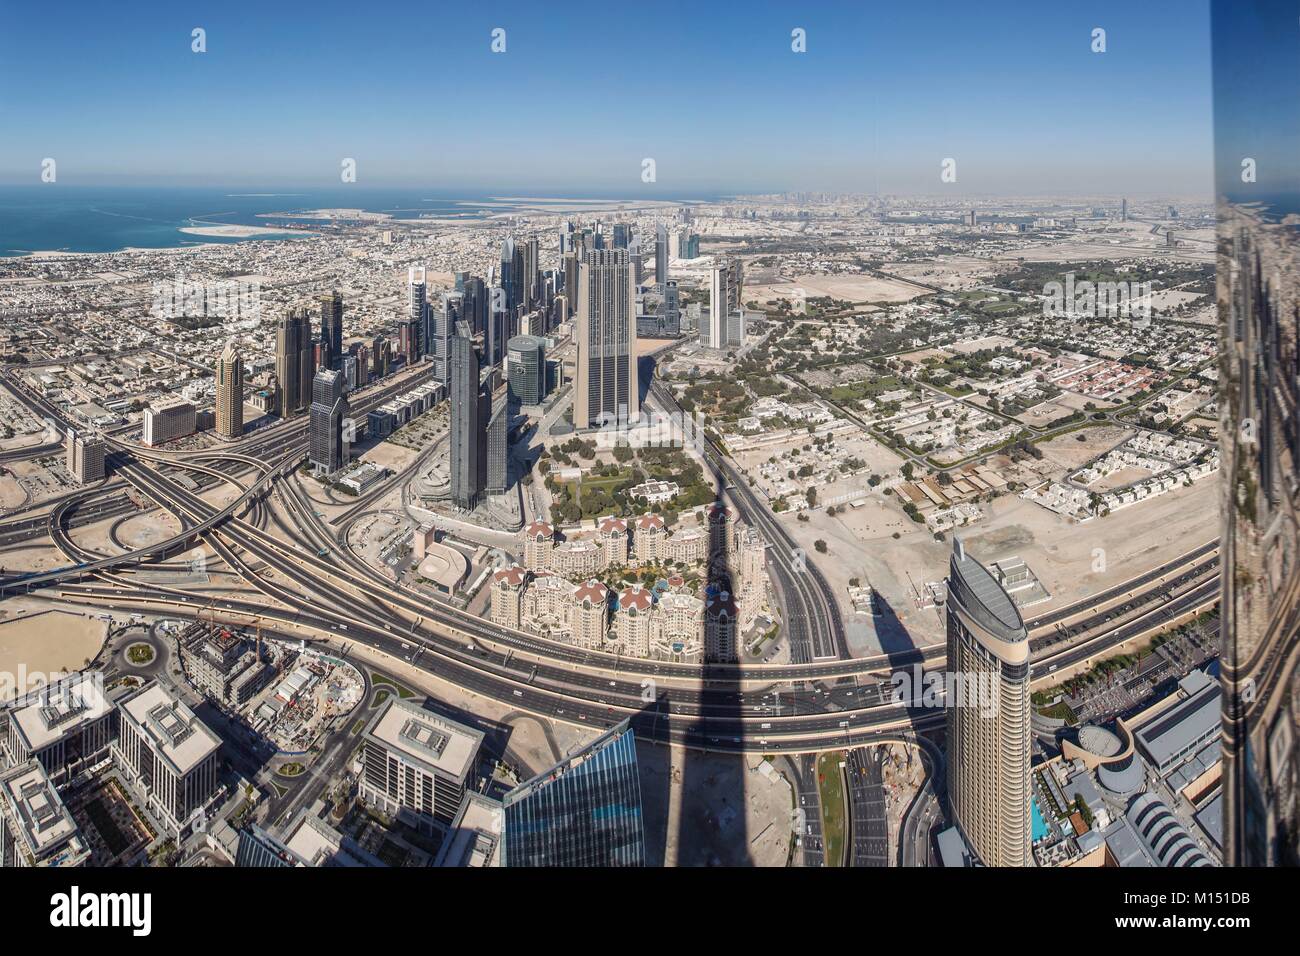 United Arab Emirates, Dubai, the towers of Sheikh Zayed Road from At The Top (Burj Khalifa) Stock Photo